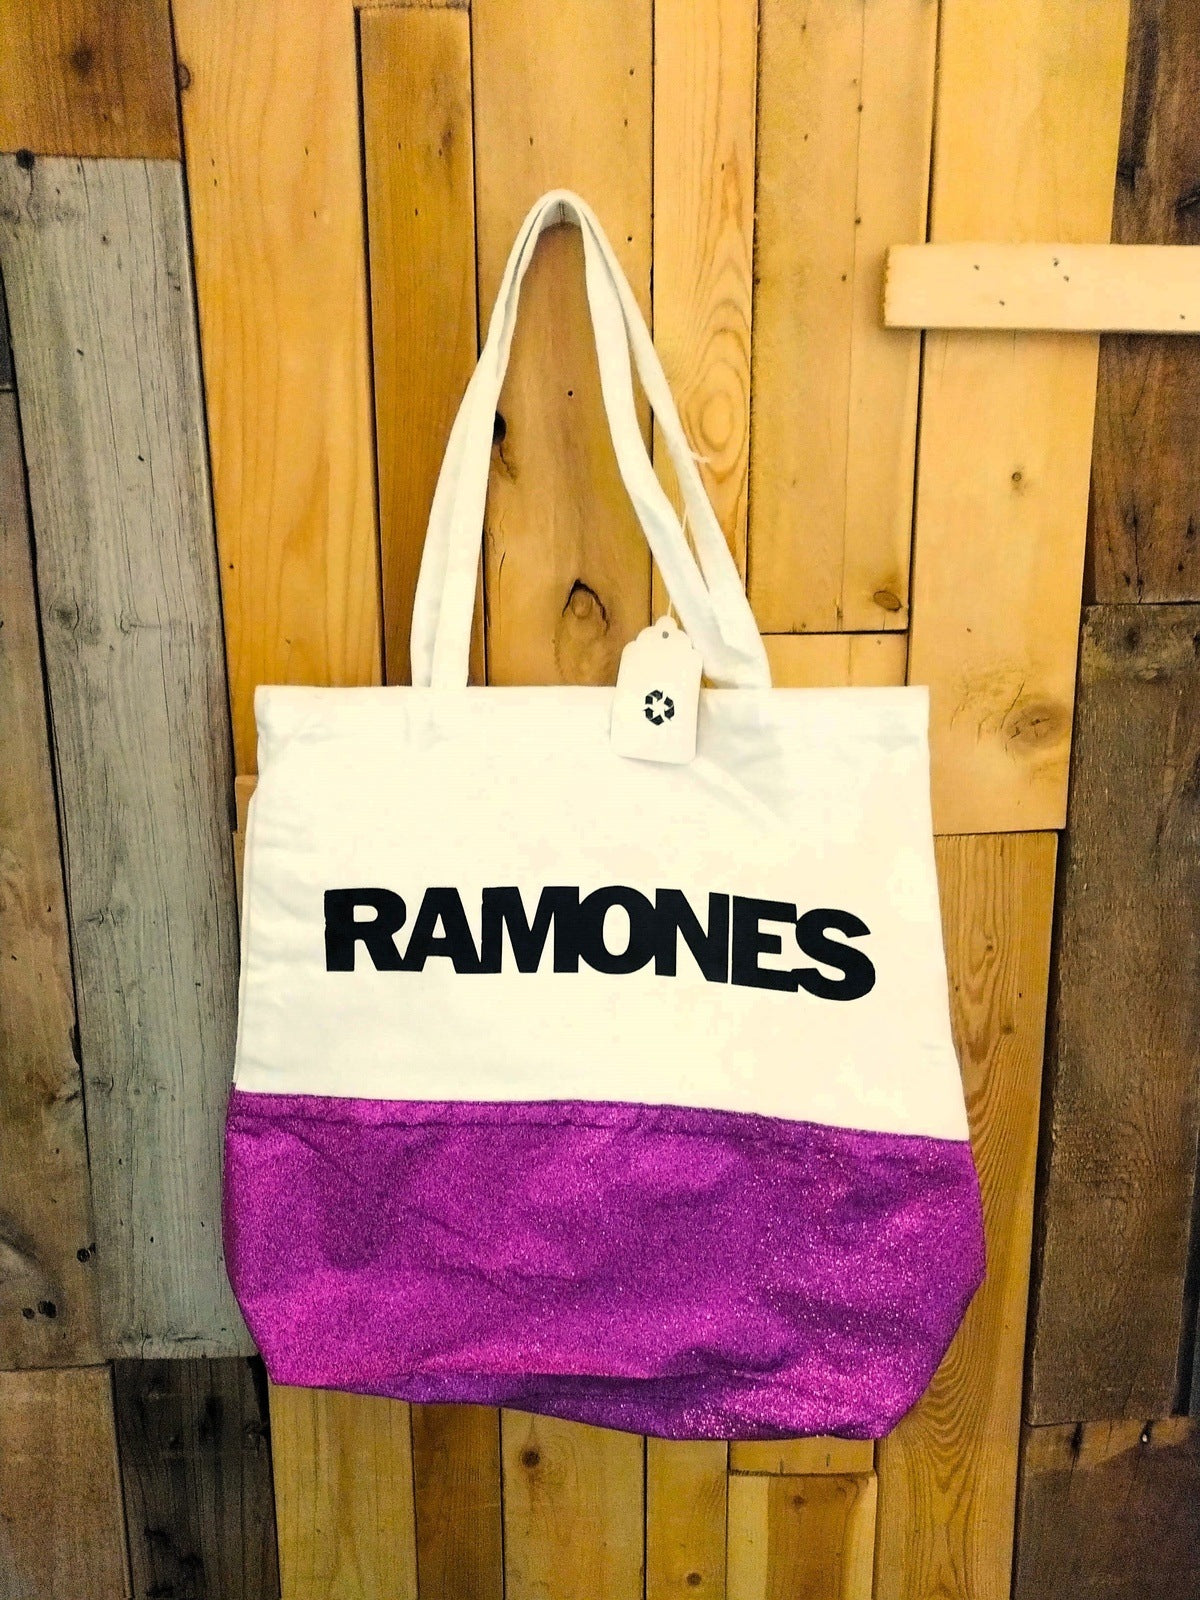 Ramones Canvas Tote with Purple Sparkle